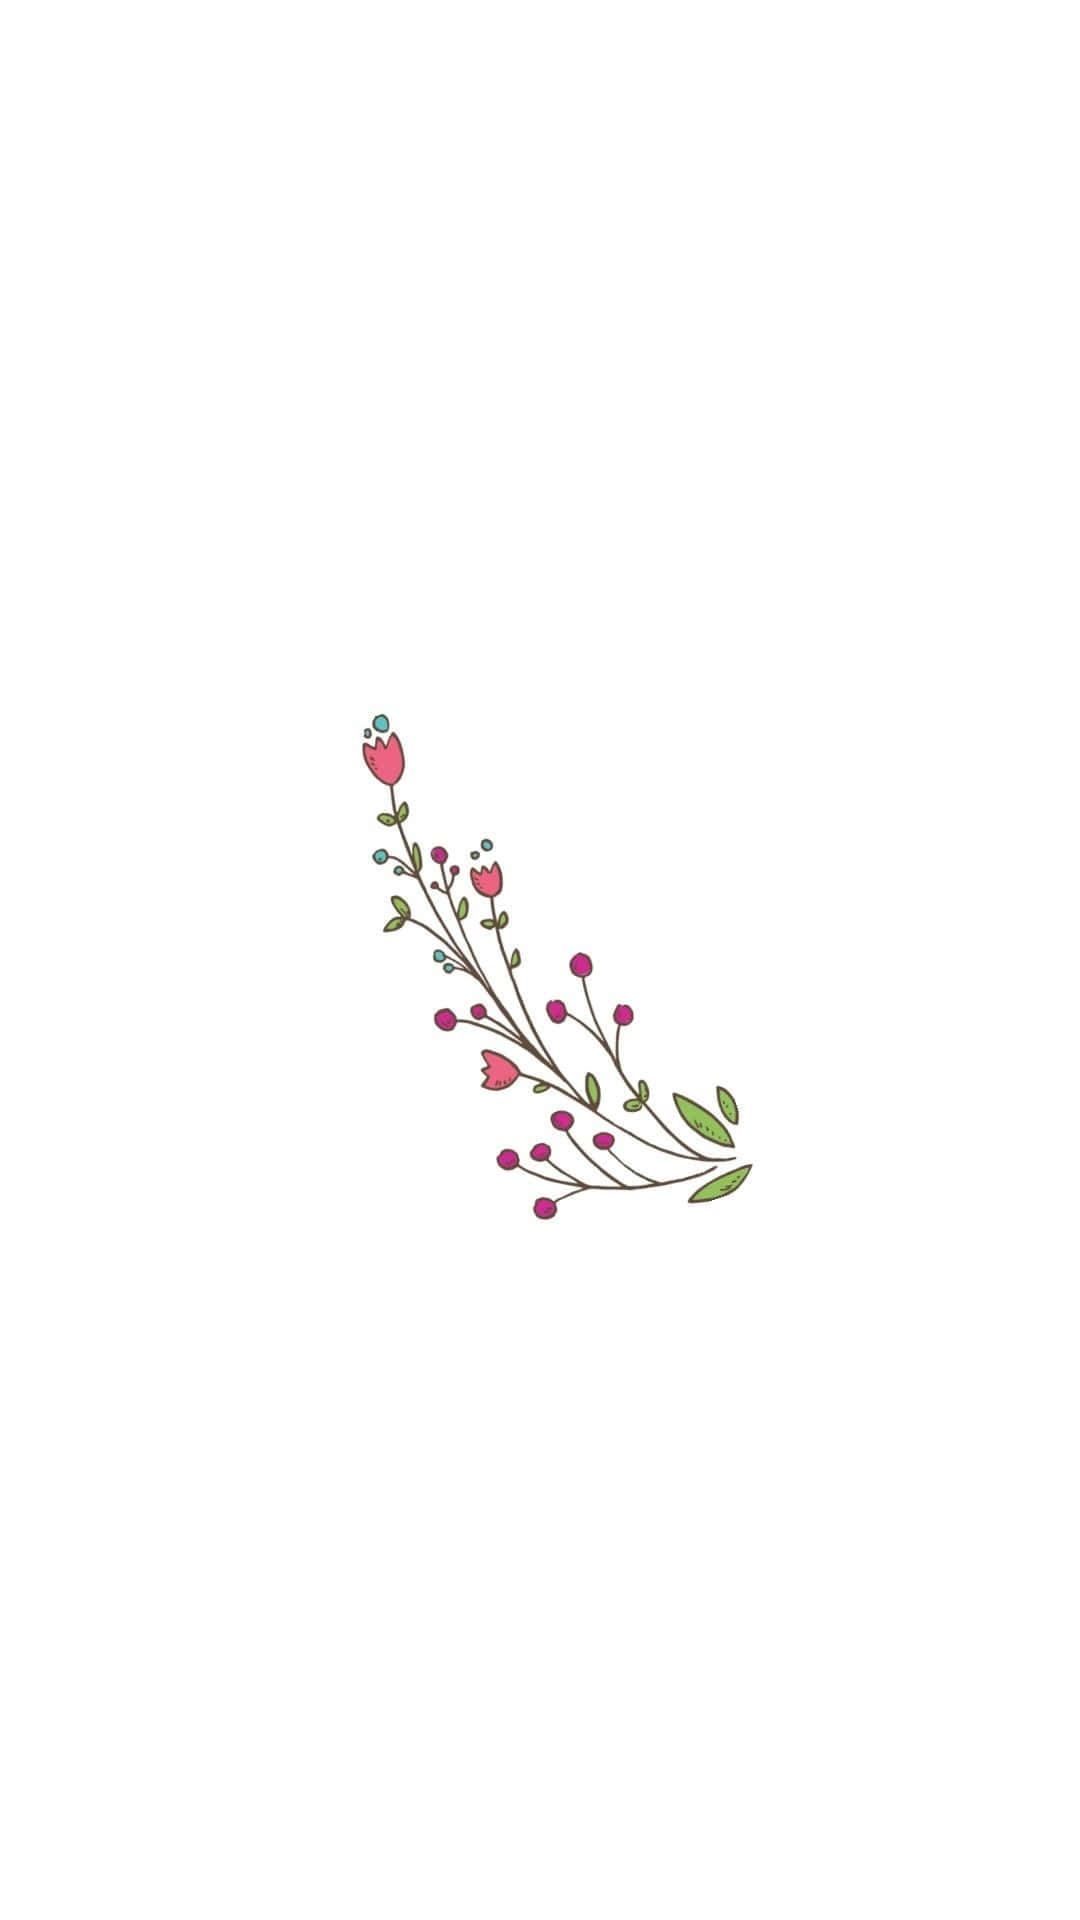 Minimalist Floral Design Artwork Wallpaper